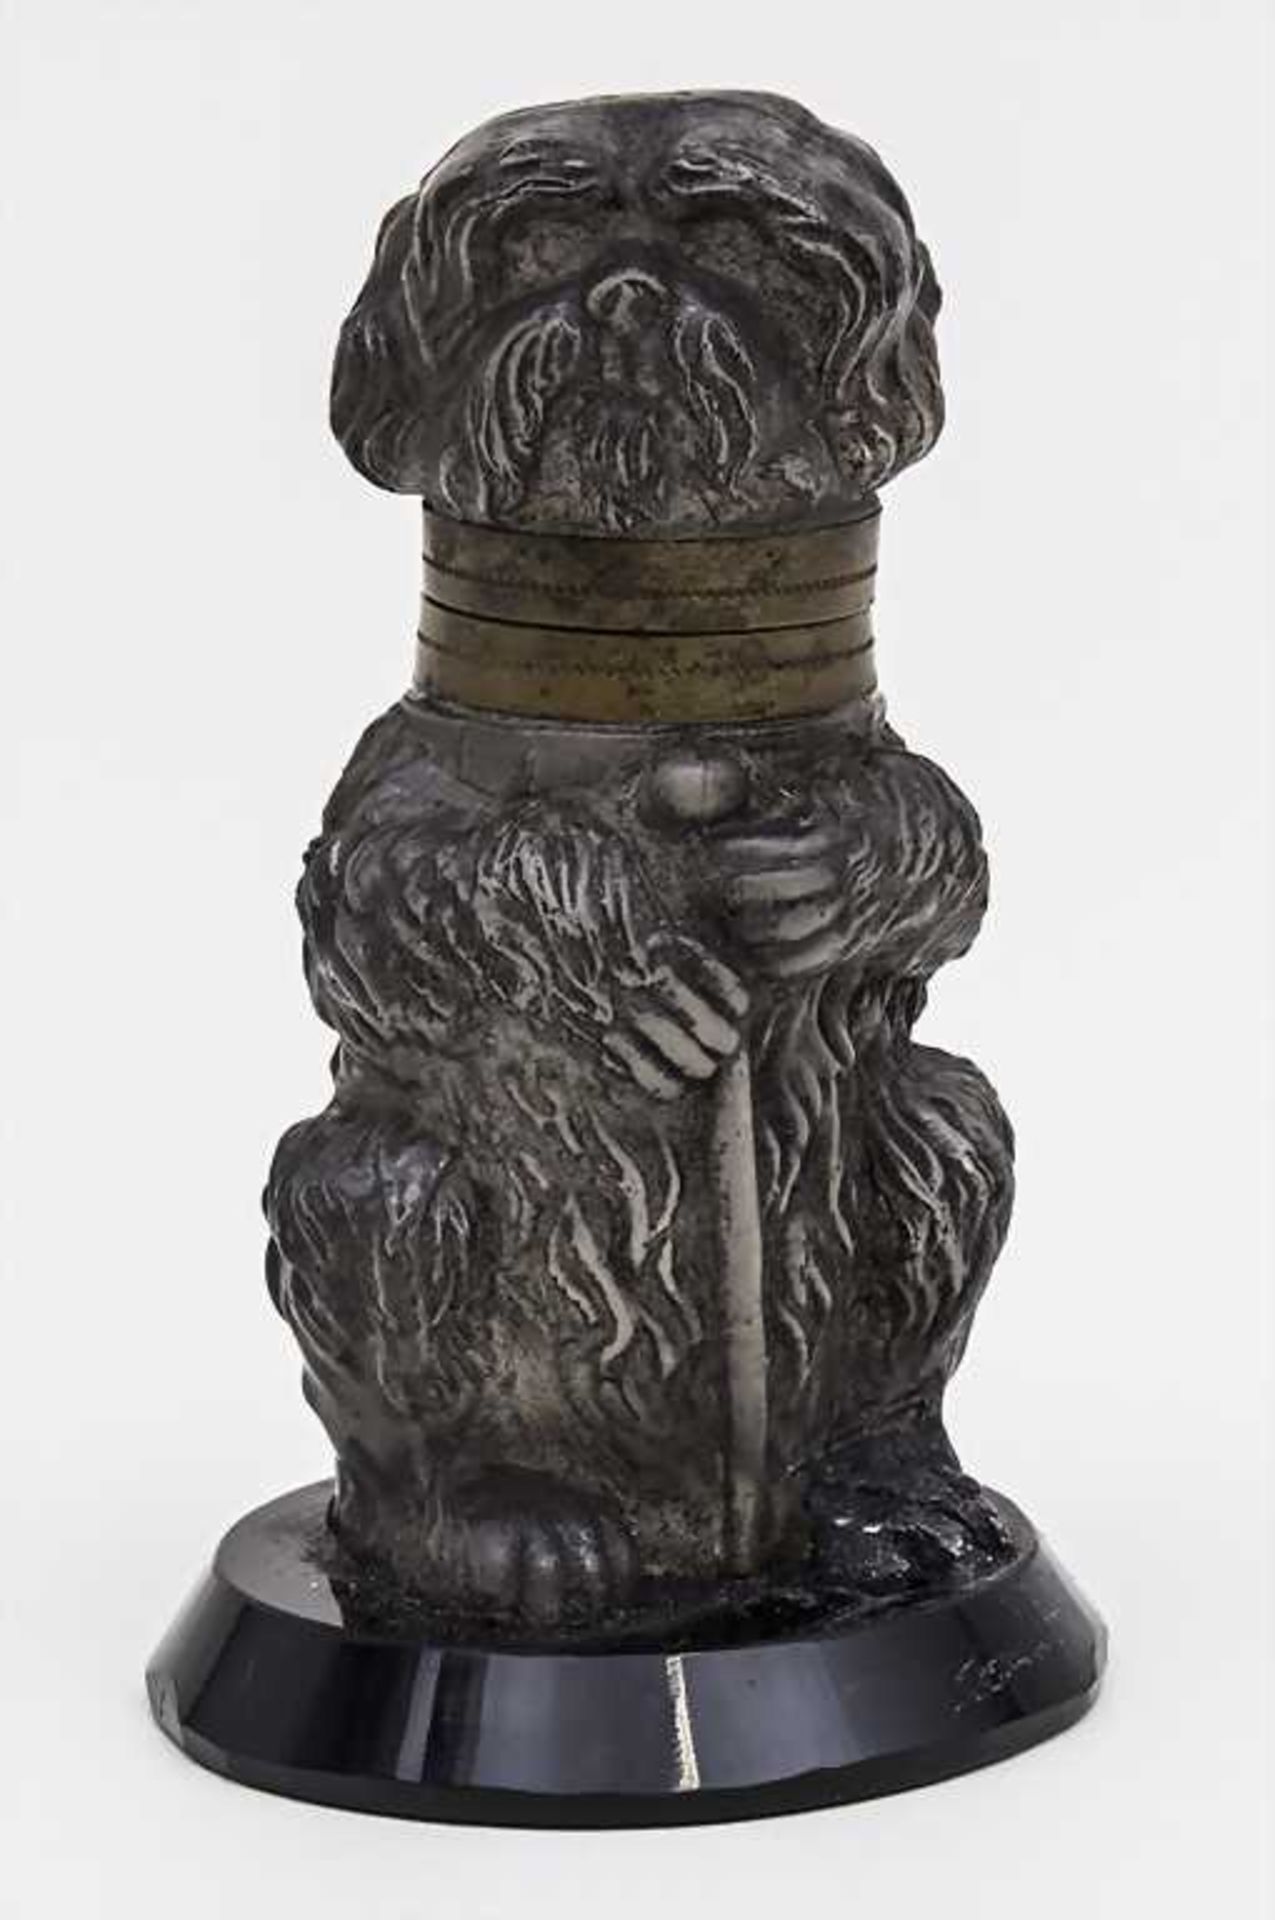 Pudel als Tintenfass / Poodle as Inkwell, deutsch, um 1890 Material: Formglas,Maße: H. 9 cm,Zustand: